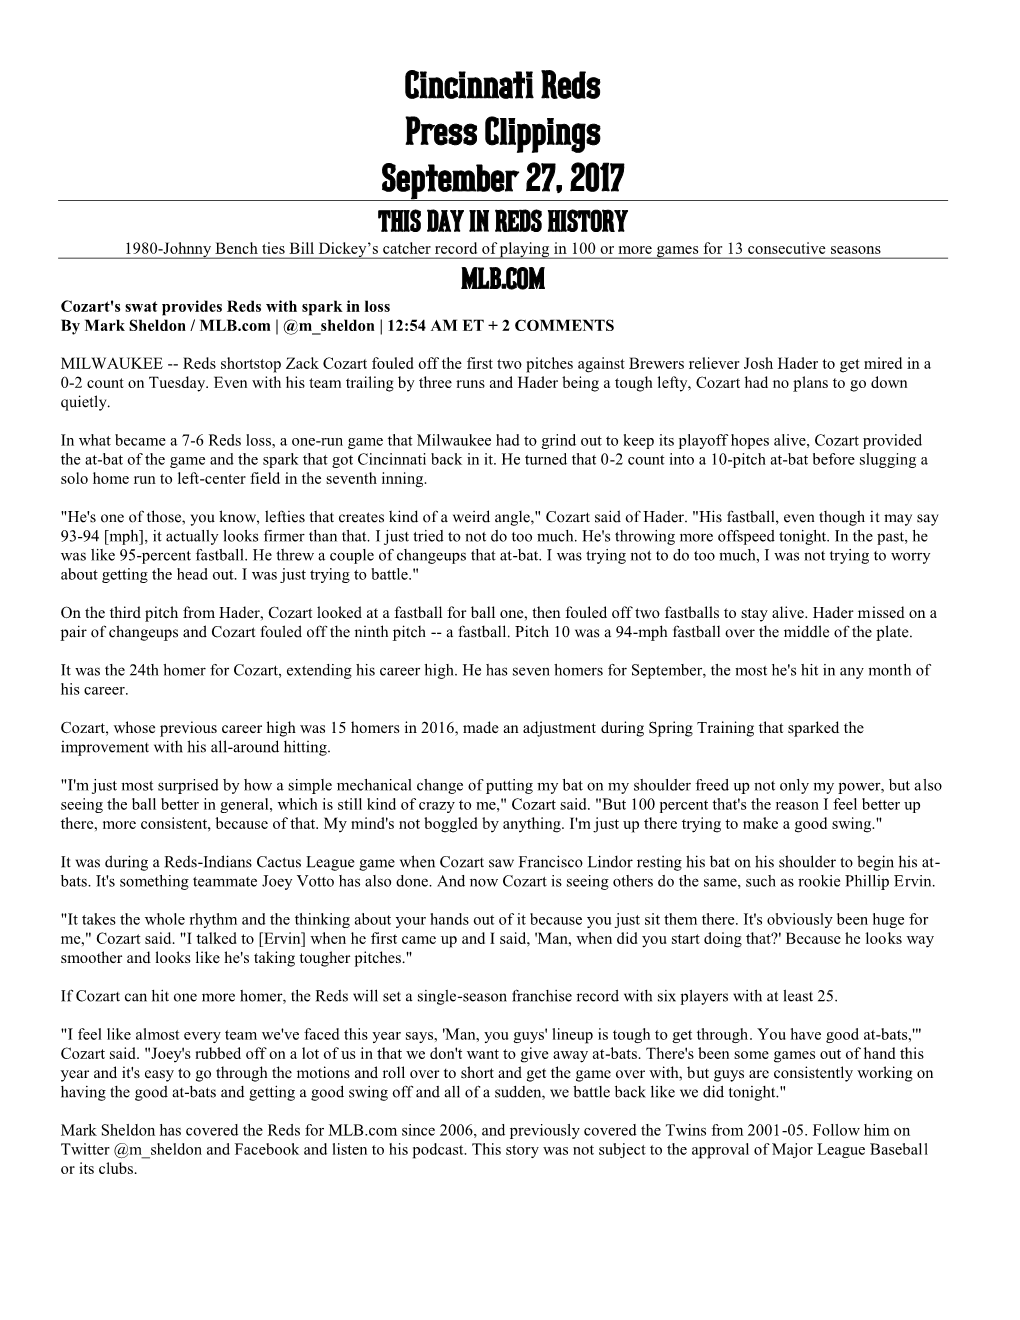 Cincinnati Reds Press Clippings September 27, 2017